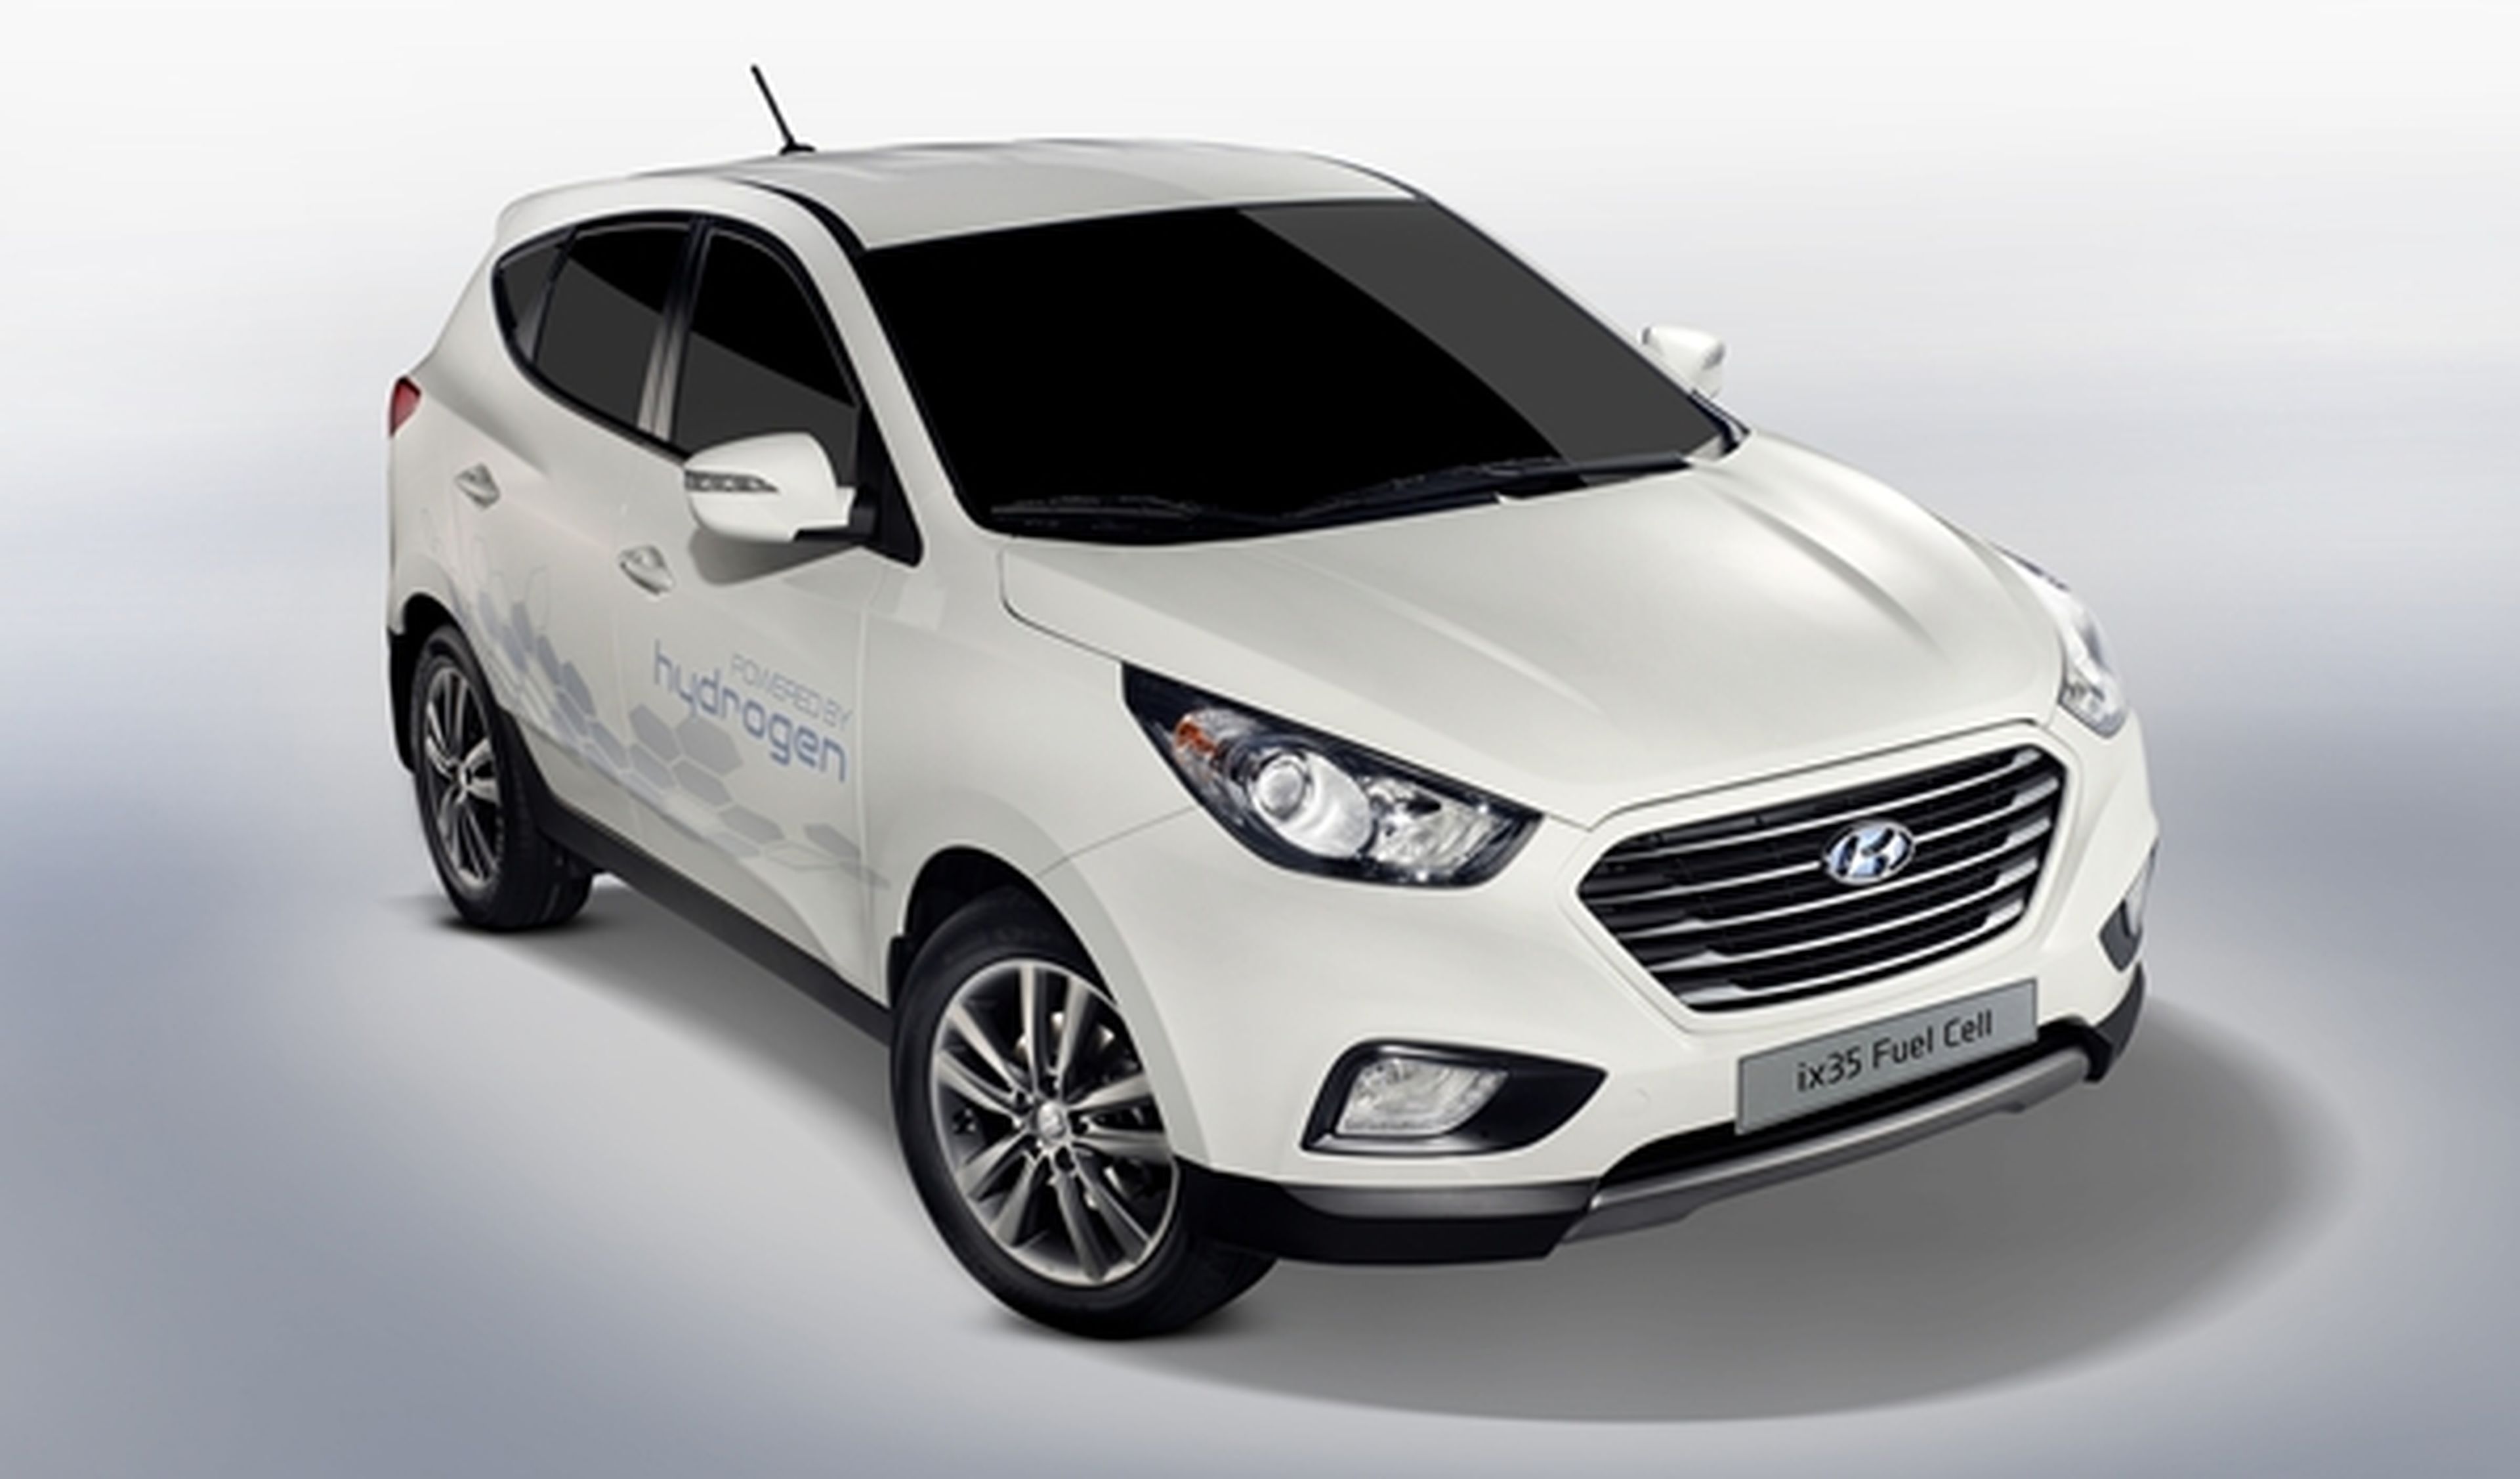 Hyundai ix35 Fuel Cell frontal